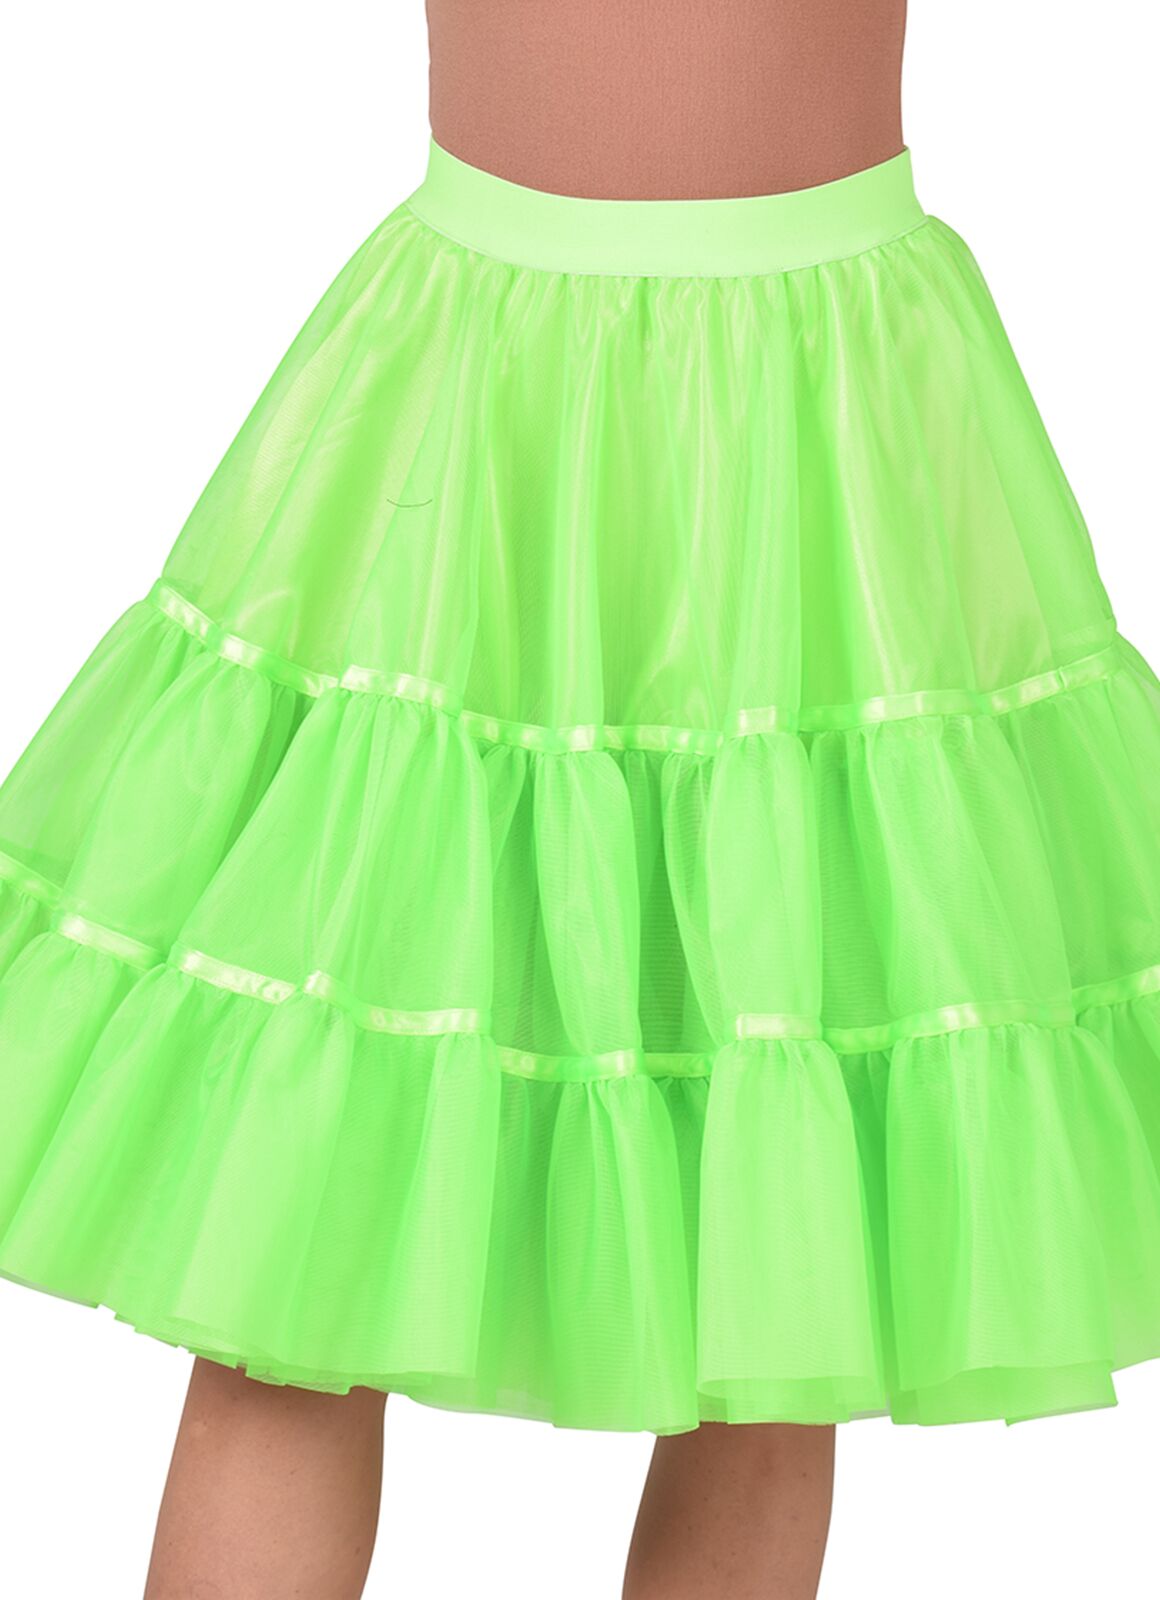 Petticoat middel lang groen dames